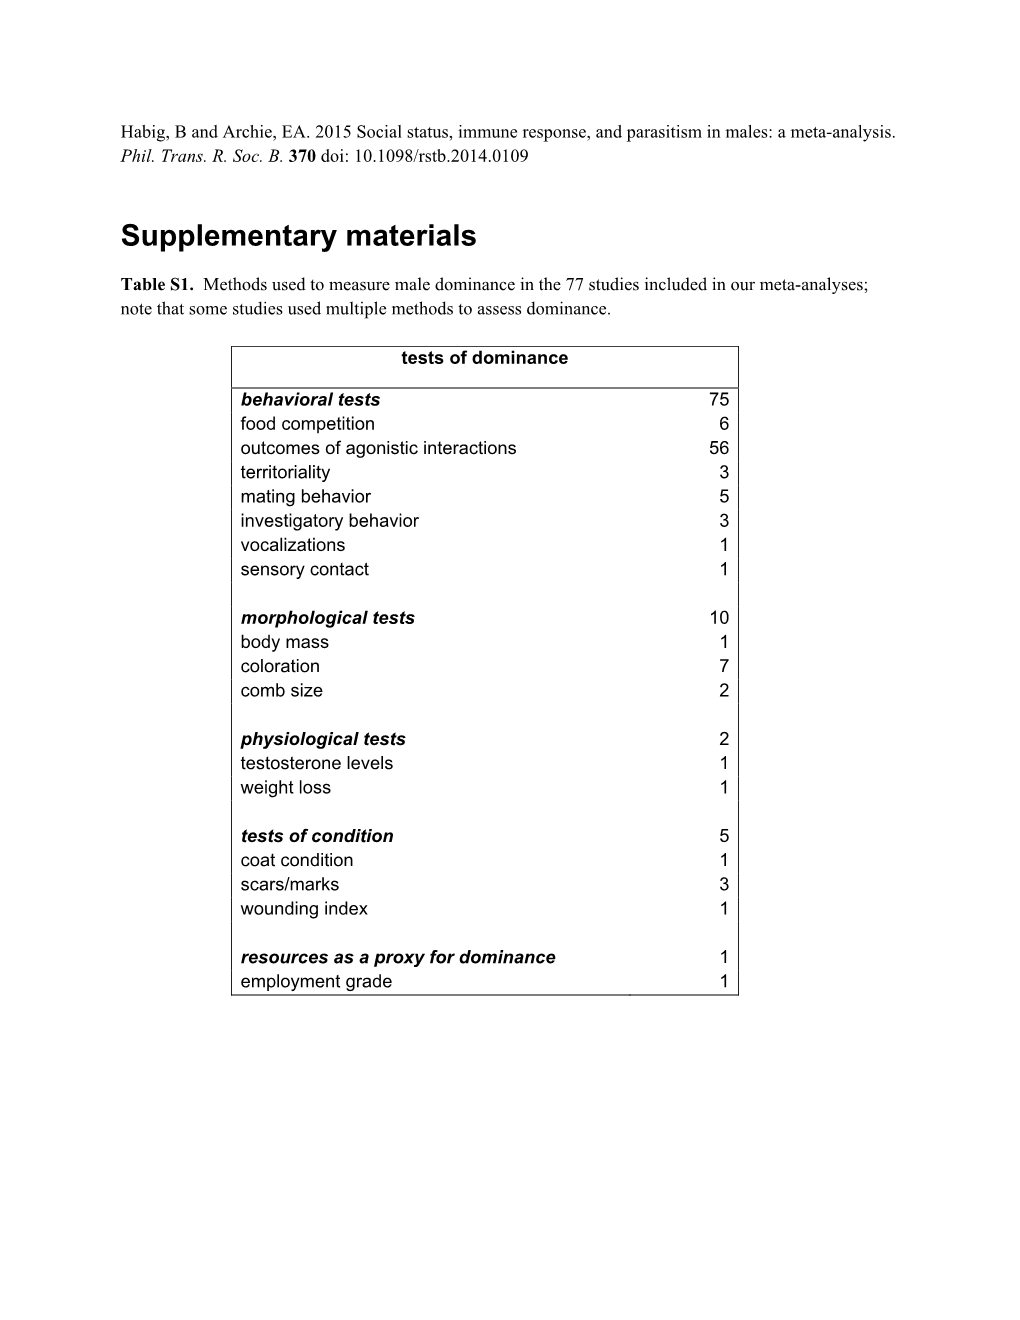 Supplementary Materials